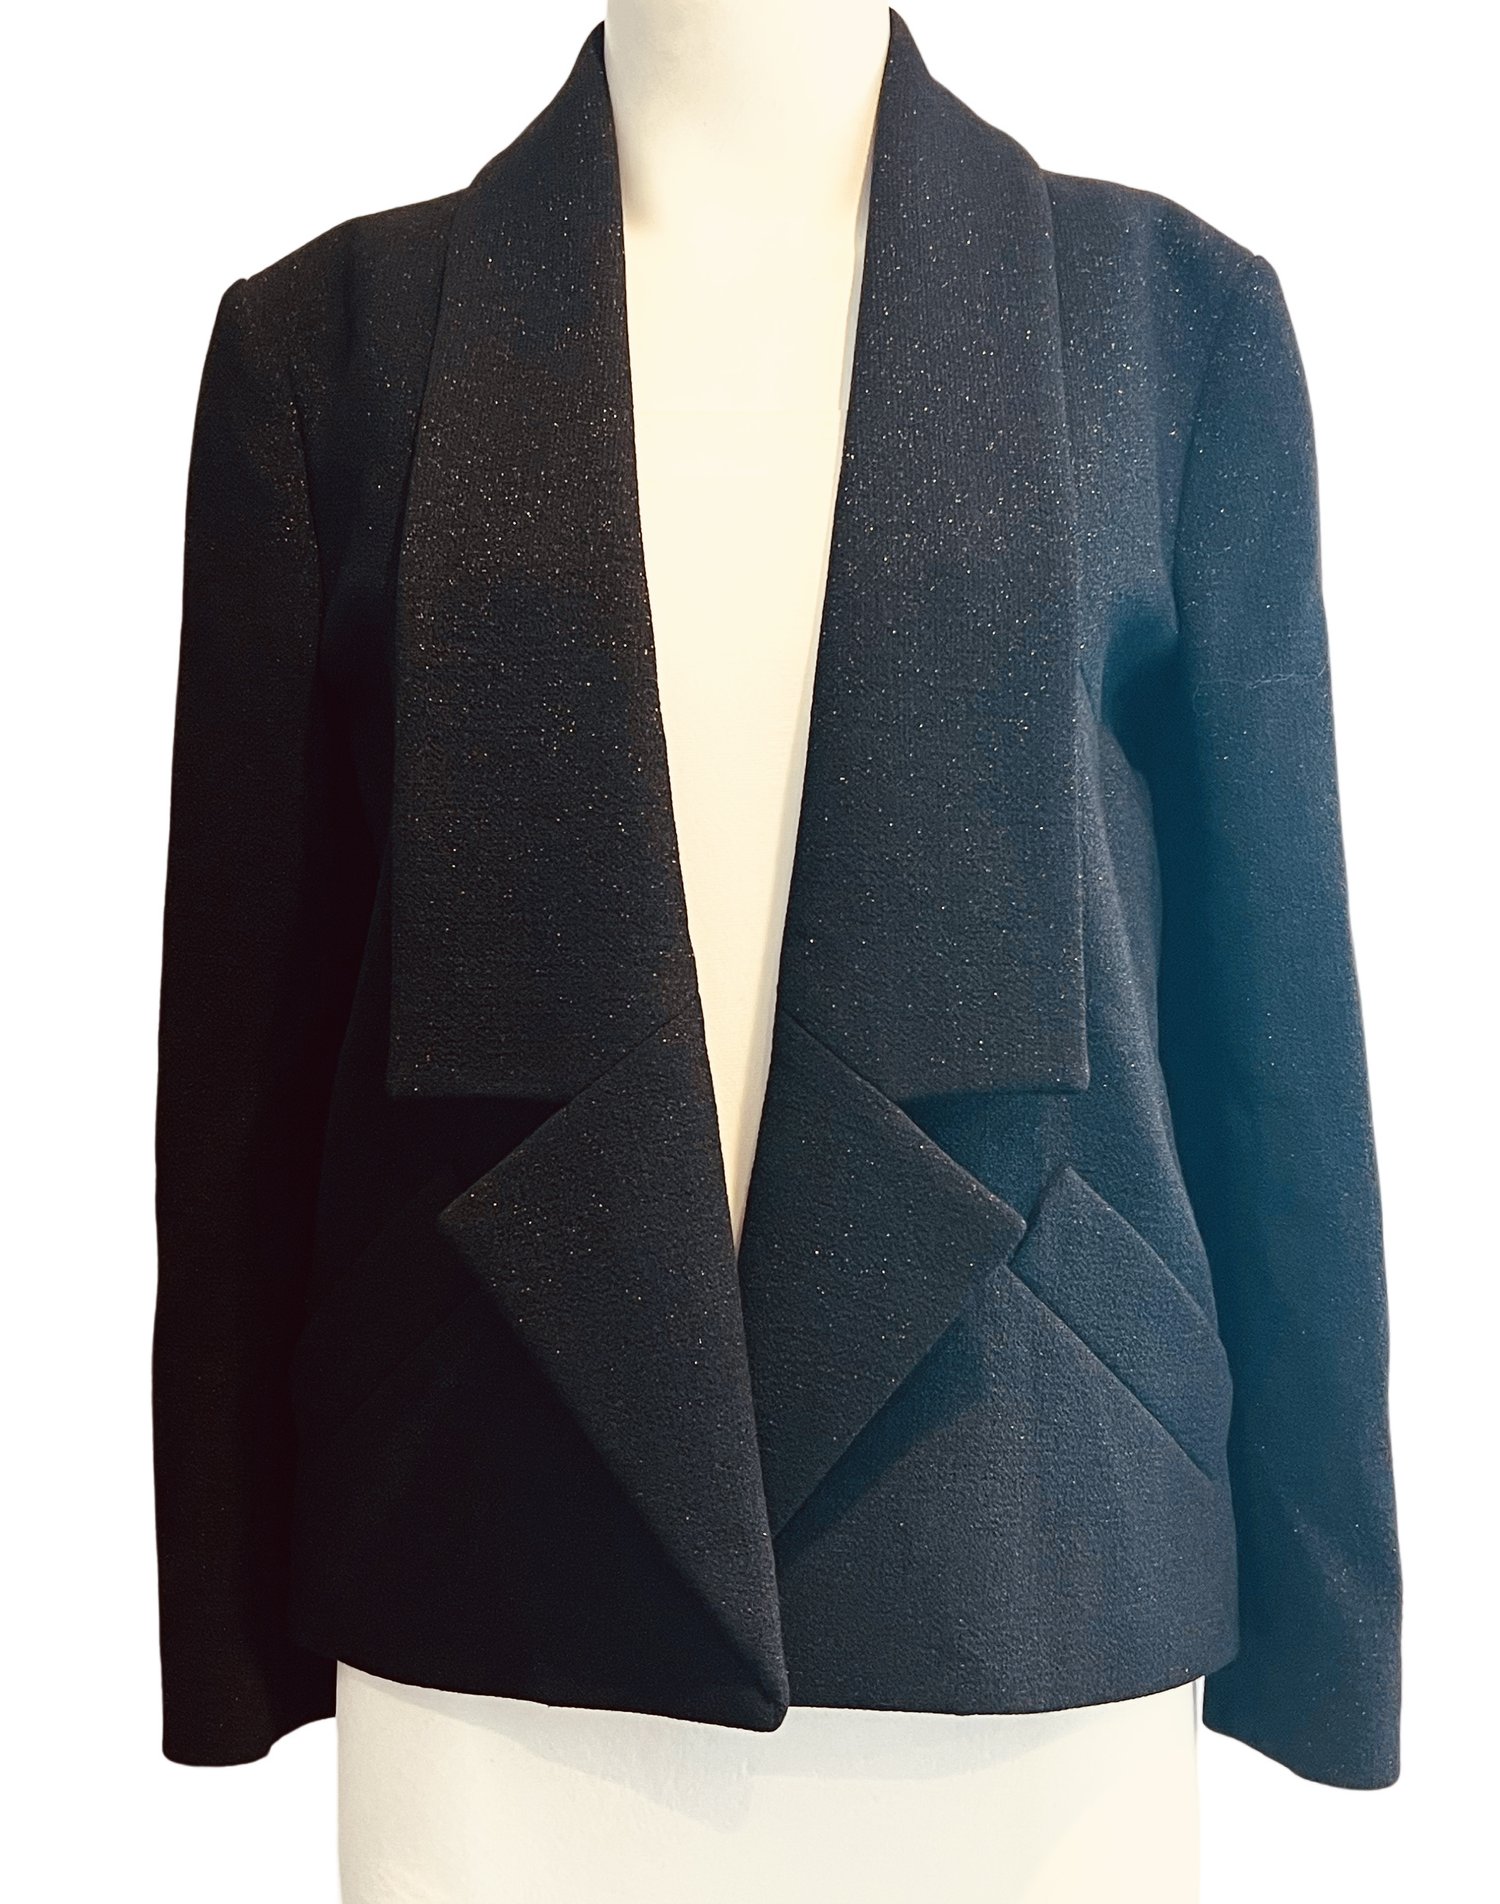 Chanel Black Tuxedo Jacket Size 38 — Socialite Auctions